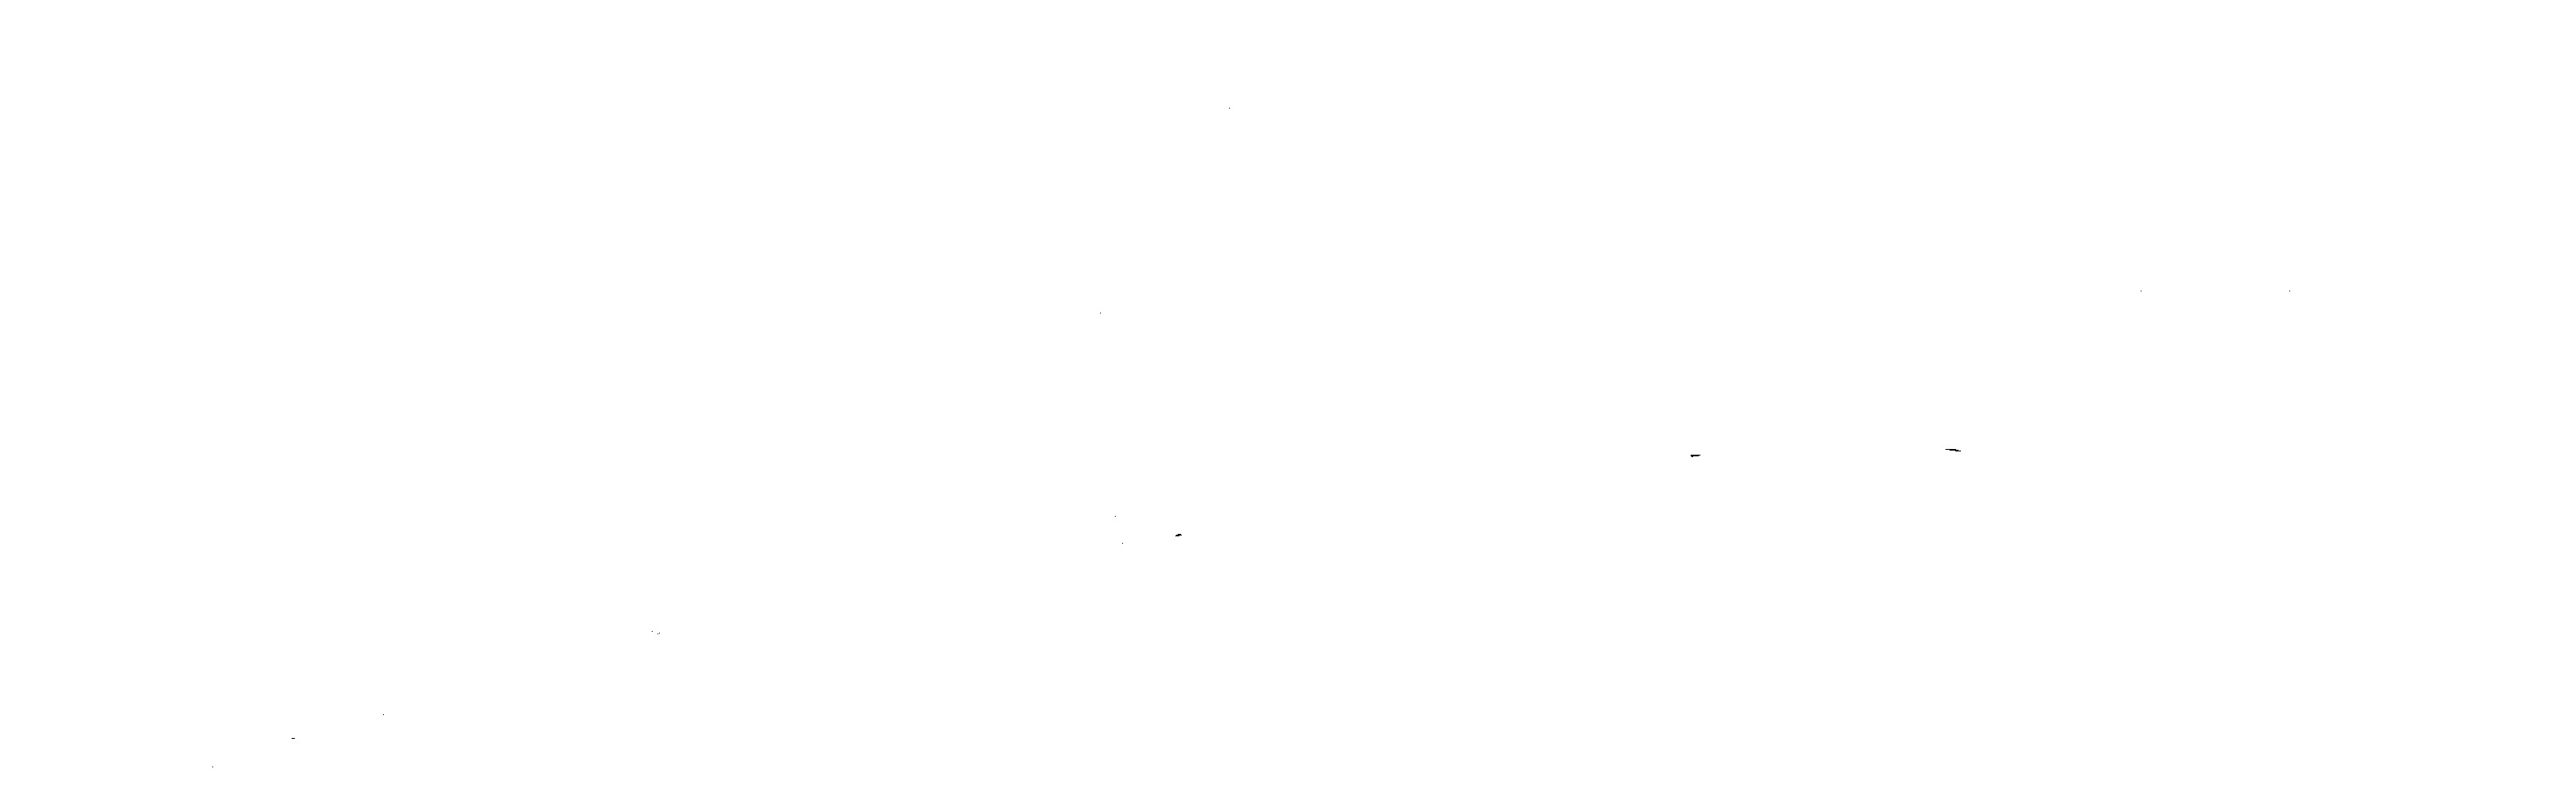 Miss Moneypenny Brokers logo